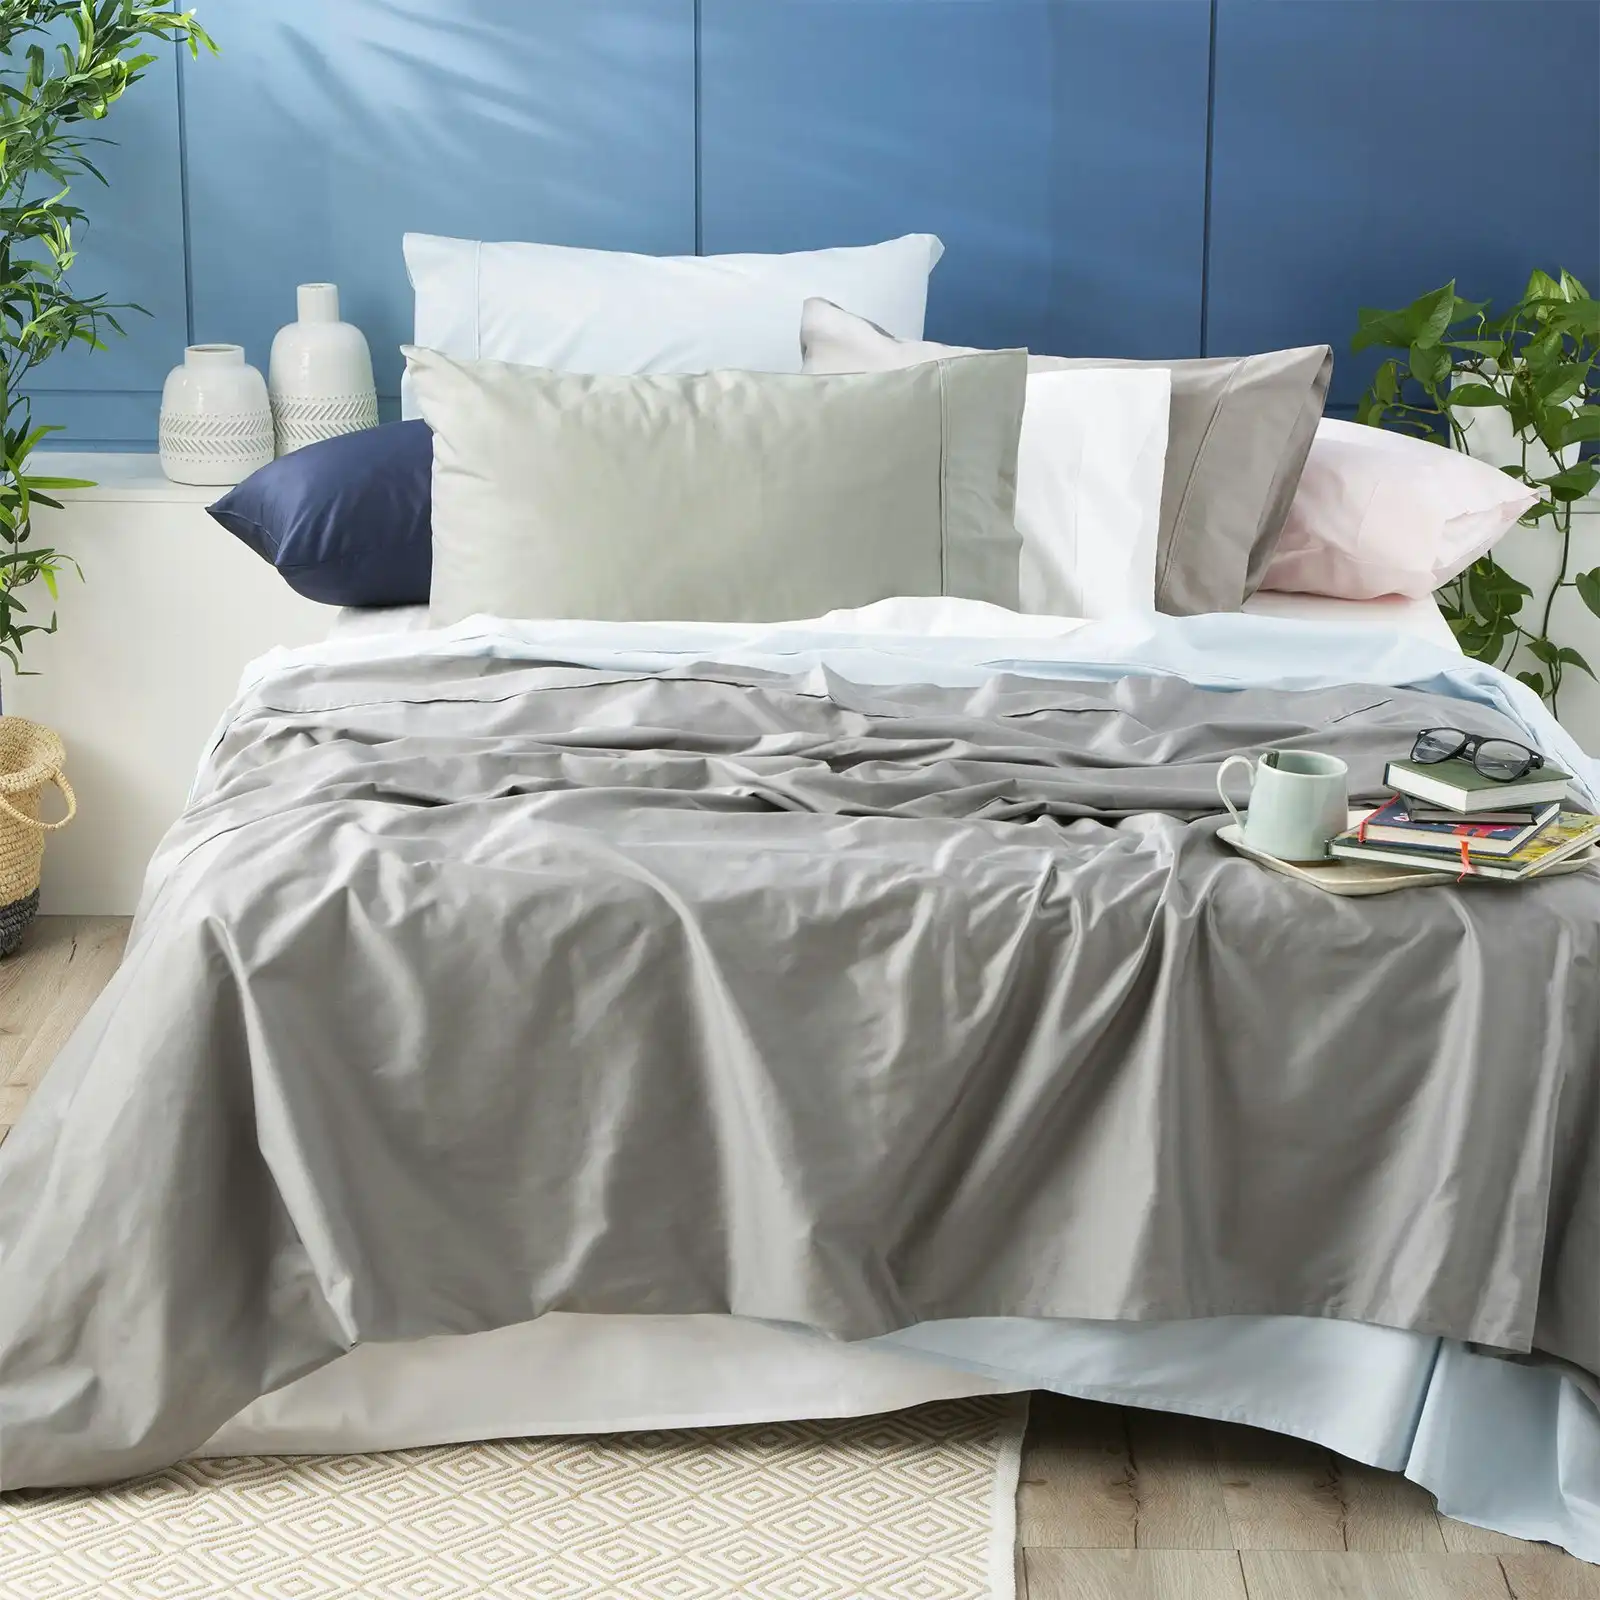 Park Avenue Mega Queen Bed Sheet/Pillowcases Set 500TC Bamboo Cotton Charcoal